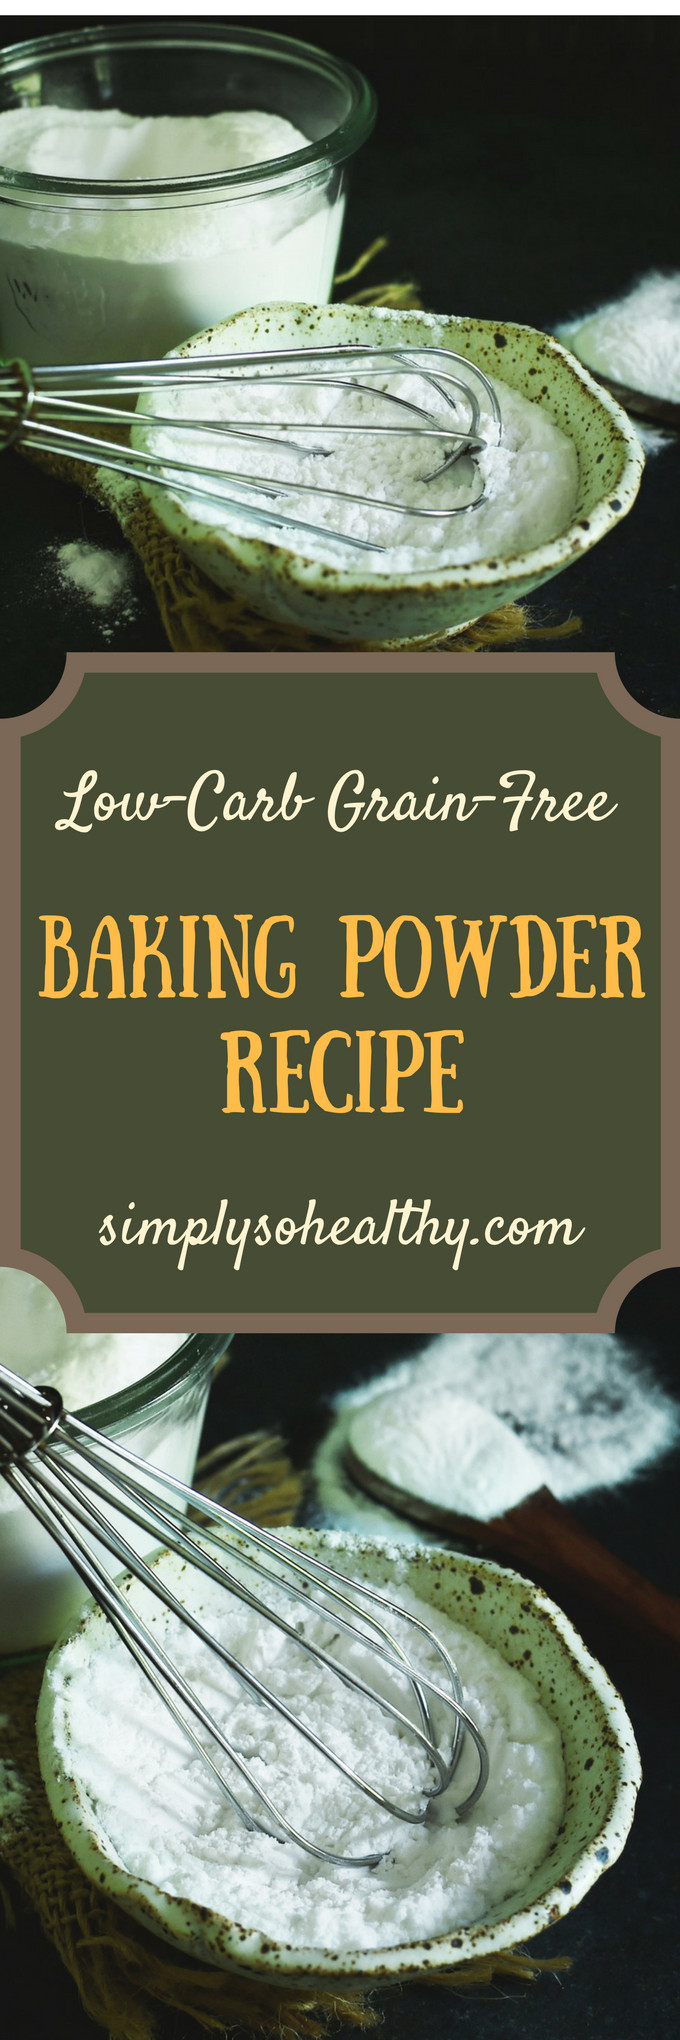 Carbs In Baking Powder
 Low Carb Baking Powder Recipe Simply So Healthy